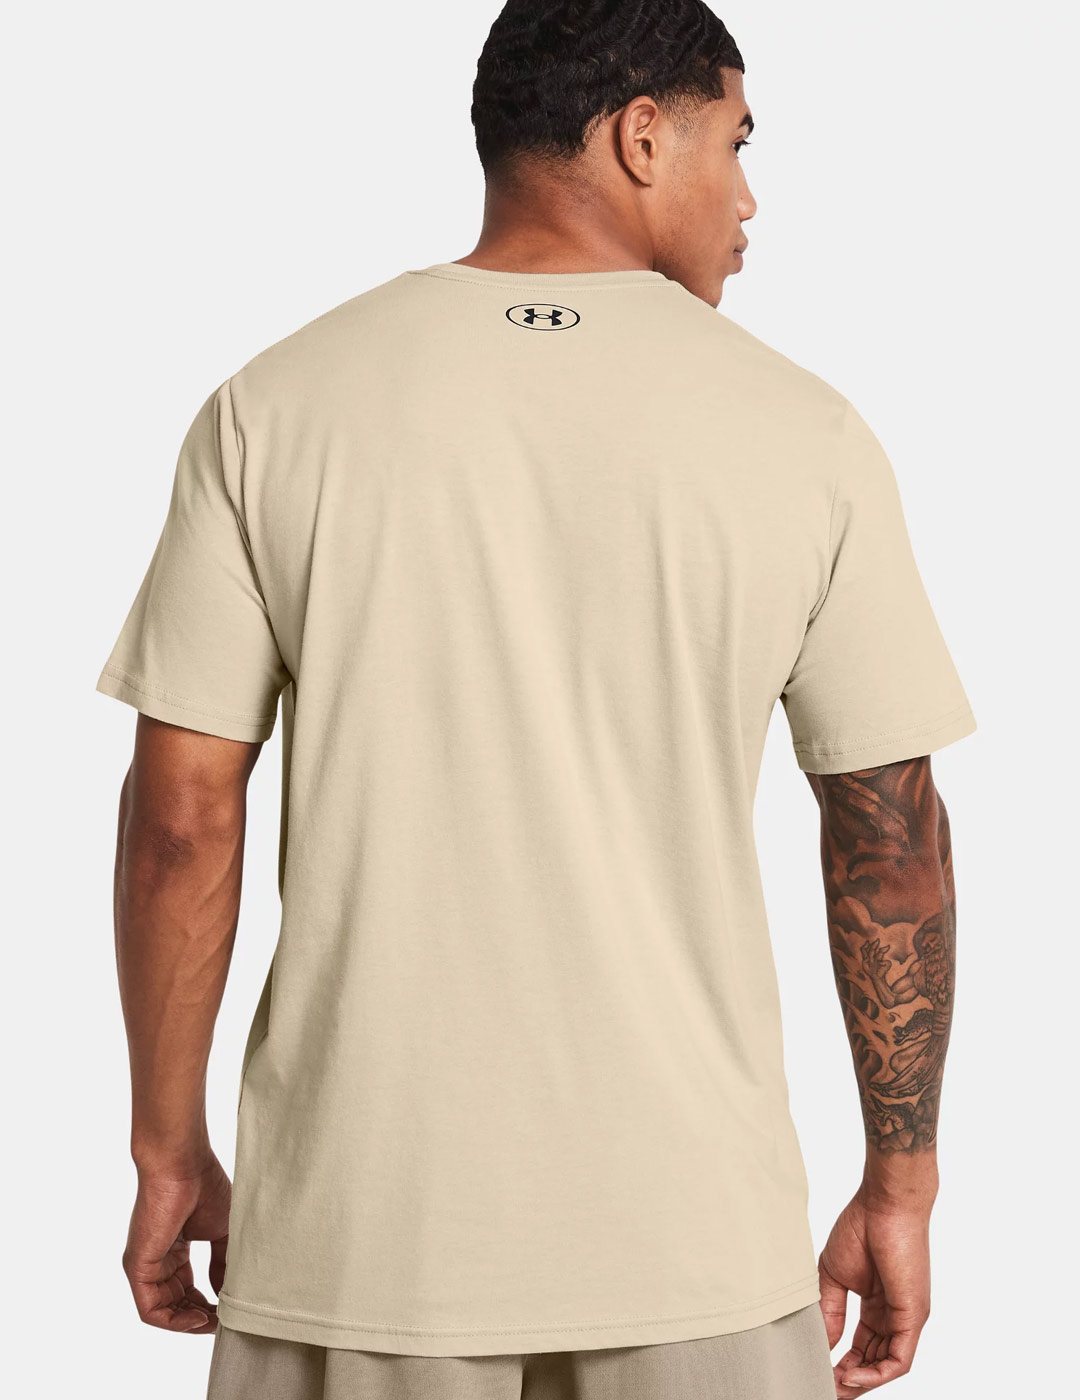 camiseta under armour hombre manga corta, beige